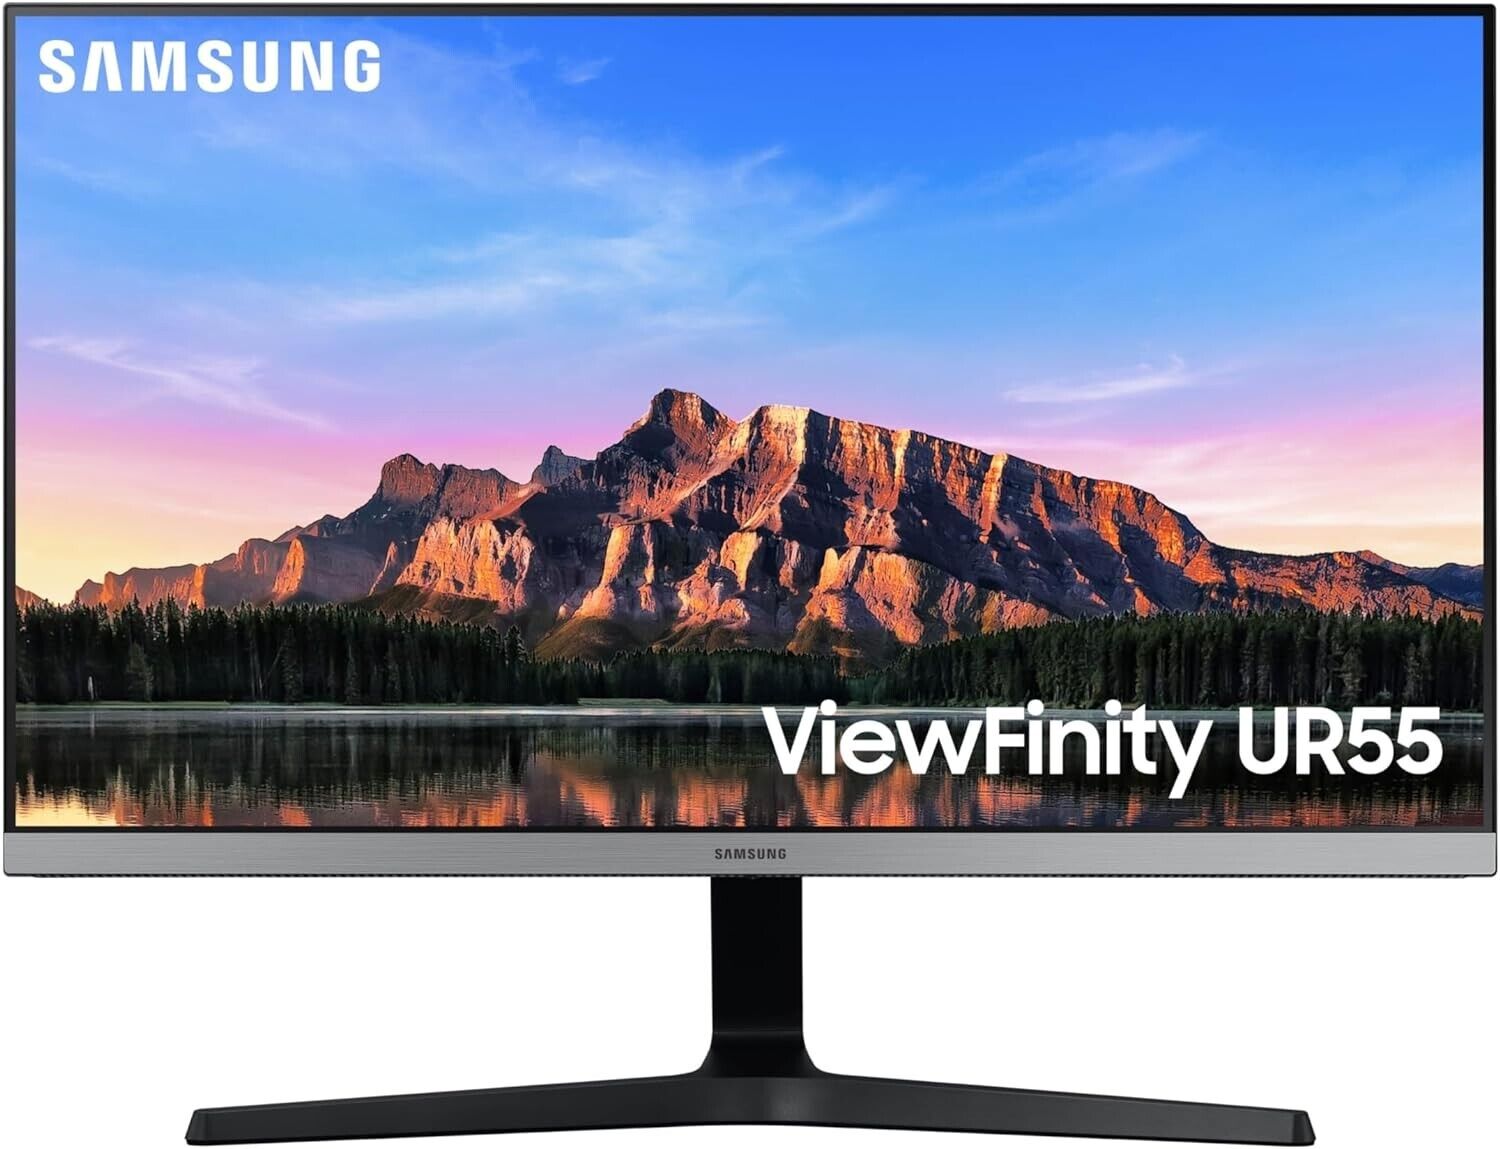 Samsung ViewFinity UR55 28